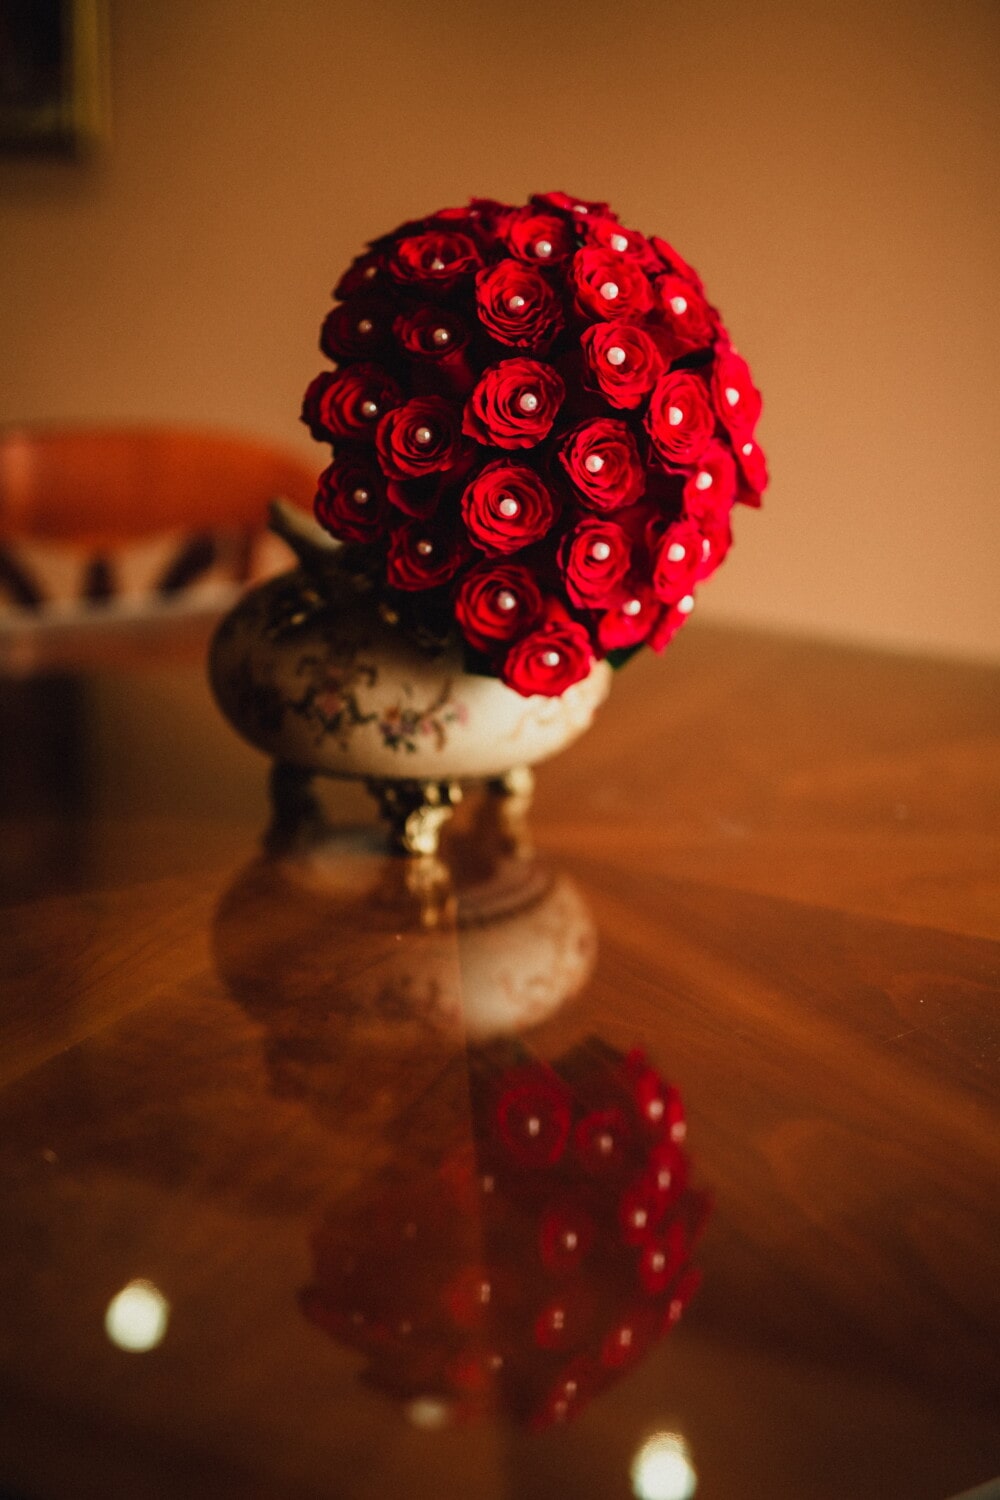 masih hidup, merapatkan, merah, mawar, karangan bunga, vas, dekorasi interior, keramik, meja, warna